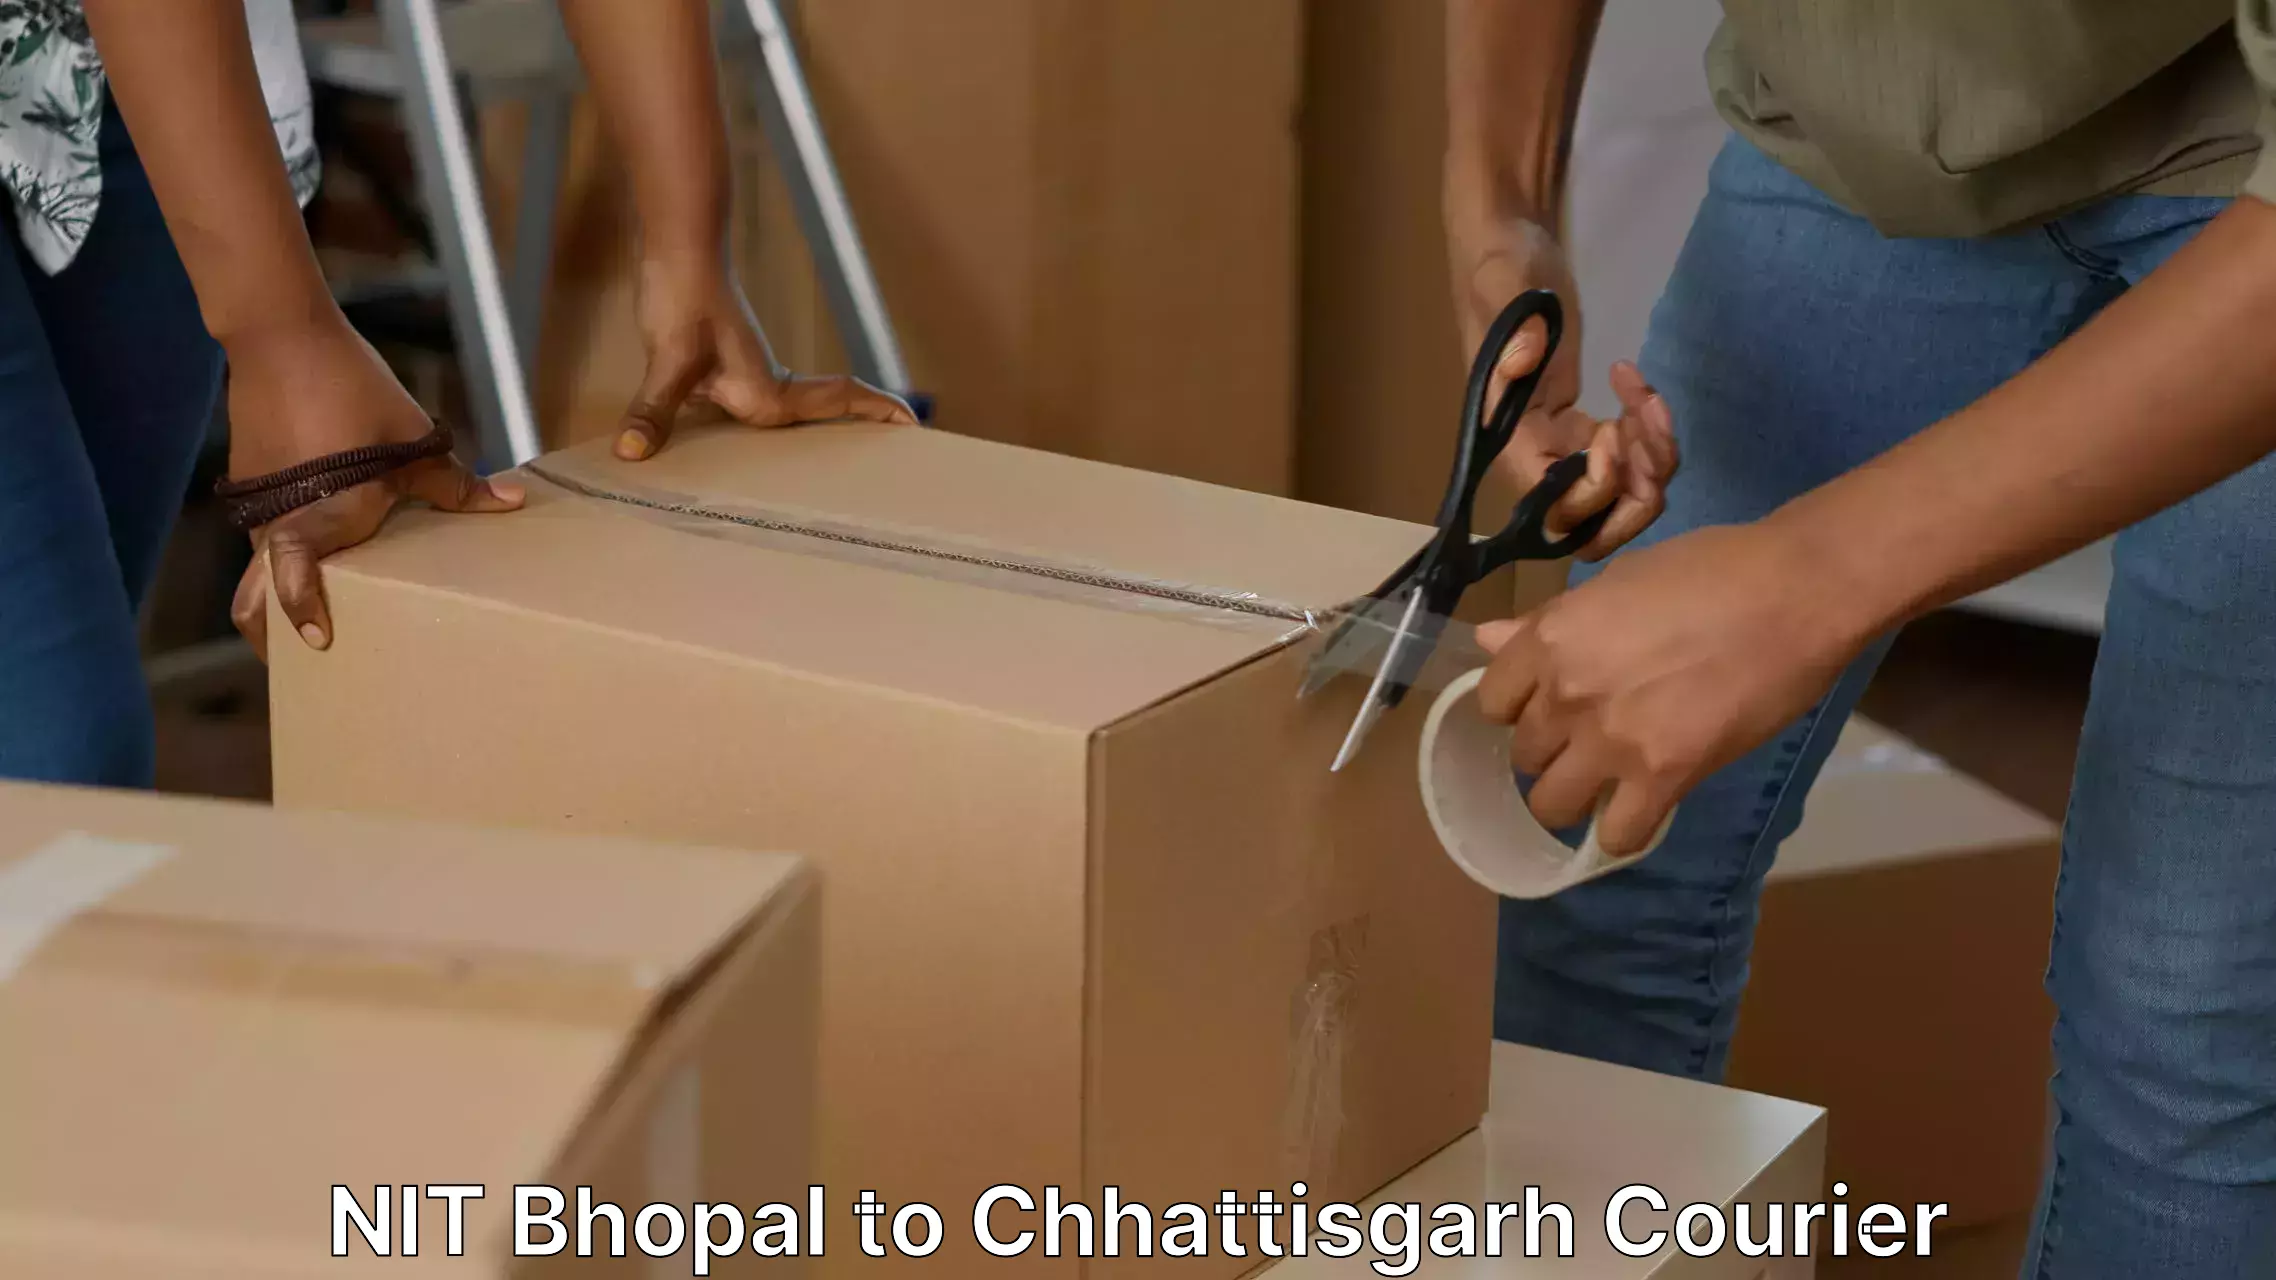 Quality relocation assistance NIT Bhopal to Raigarh Chhattisgarh